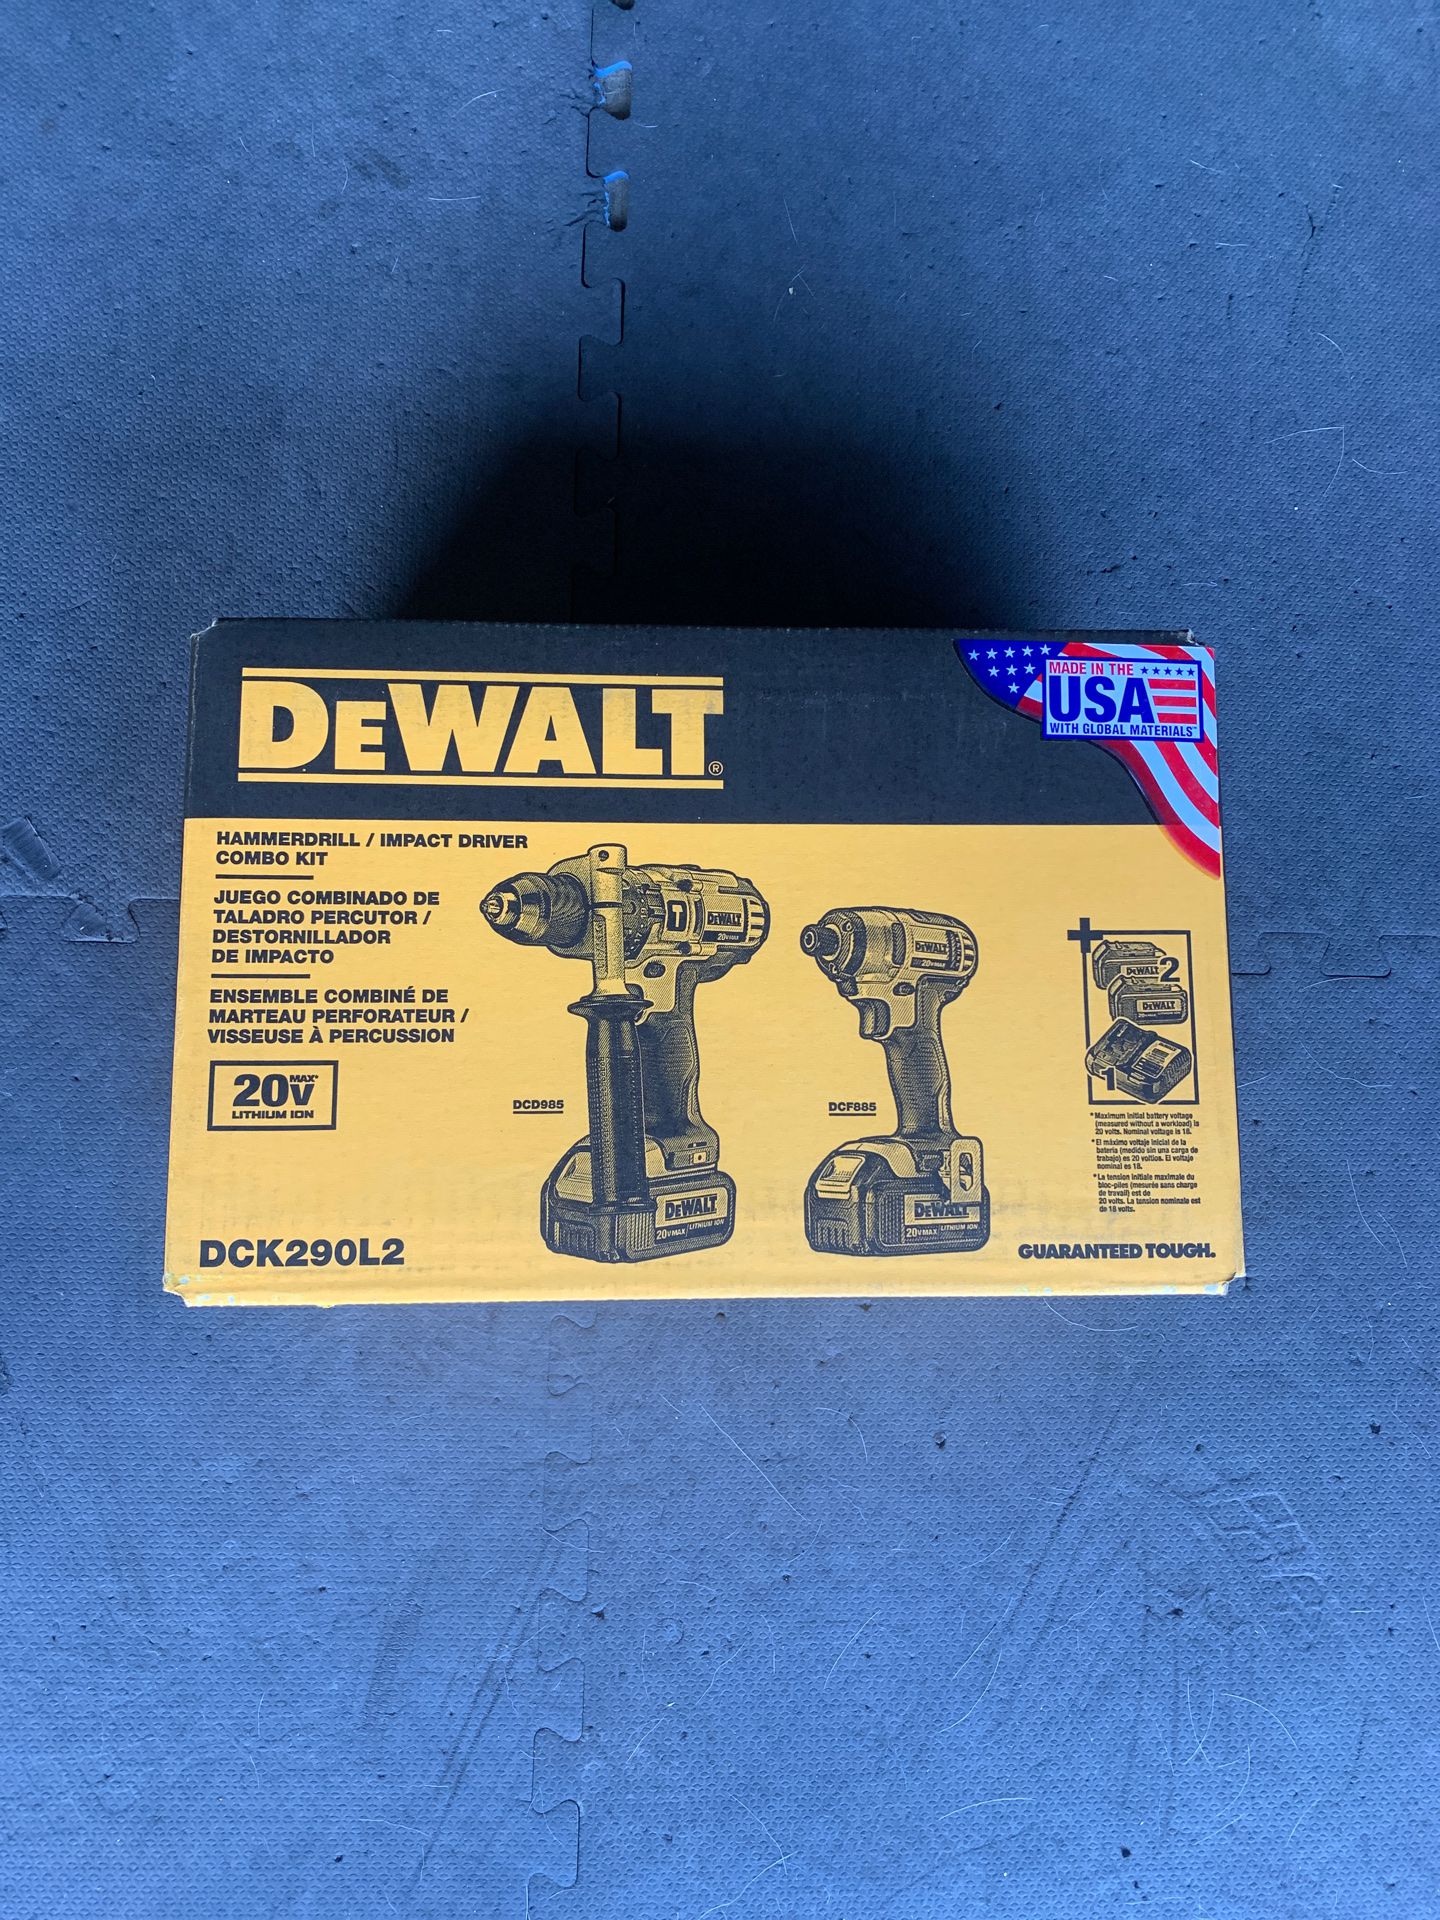 NEW DeWalt hammer drill / impact driver combo kit